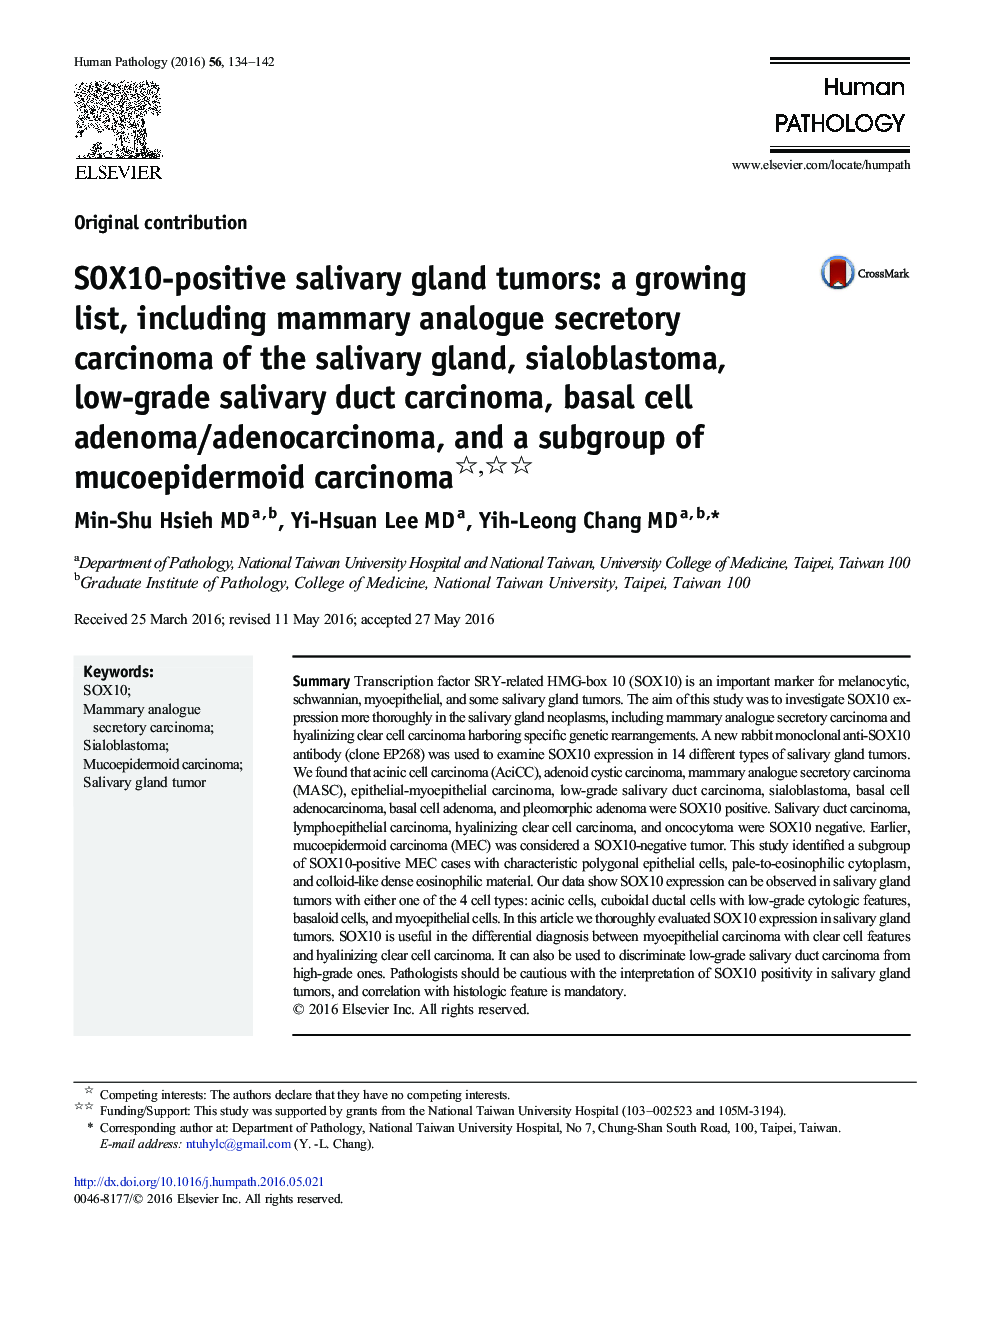 SOX10-positive salivary gland tumors: a growing list, including mammary analogue secretory carcinoma of the salivary gland, sialoblastoma, low-grade salivary duct carcinoma, basal cell adenoma/adenocarcinoma, and a subgroup of mucoepidermoid carcinoma 